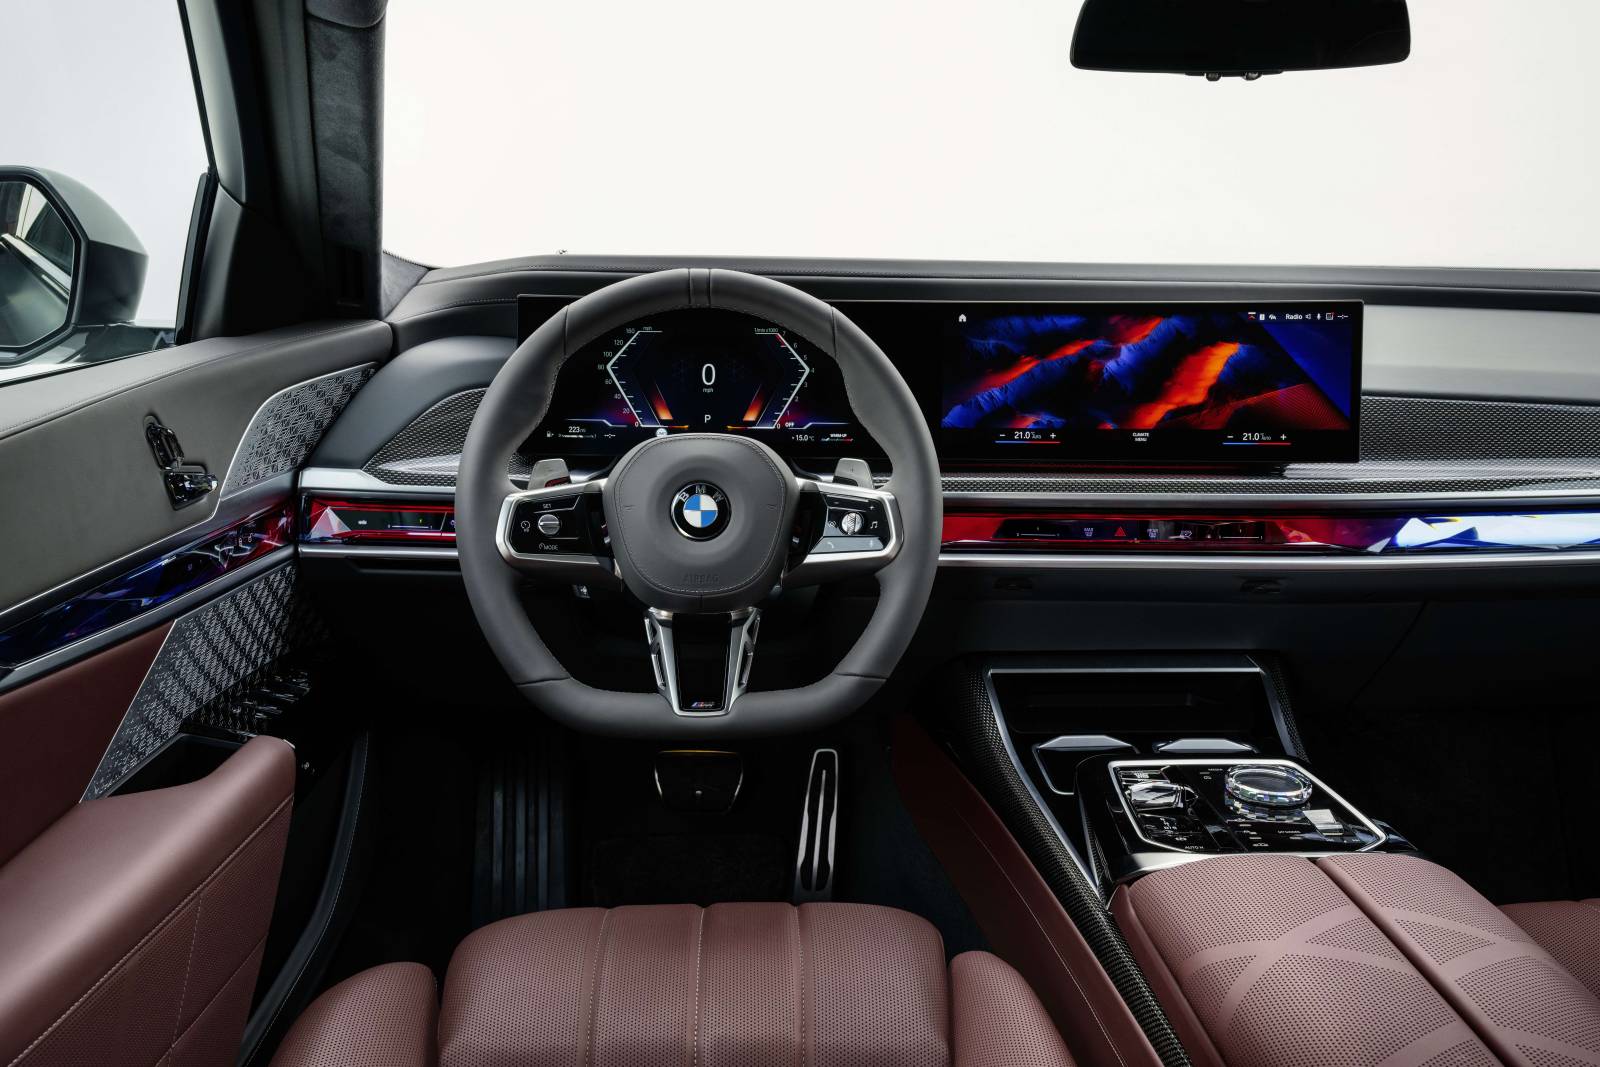 BMW i7 premium sedan is here, starting at $120,000 - ArenaEV news